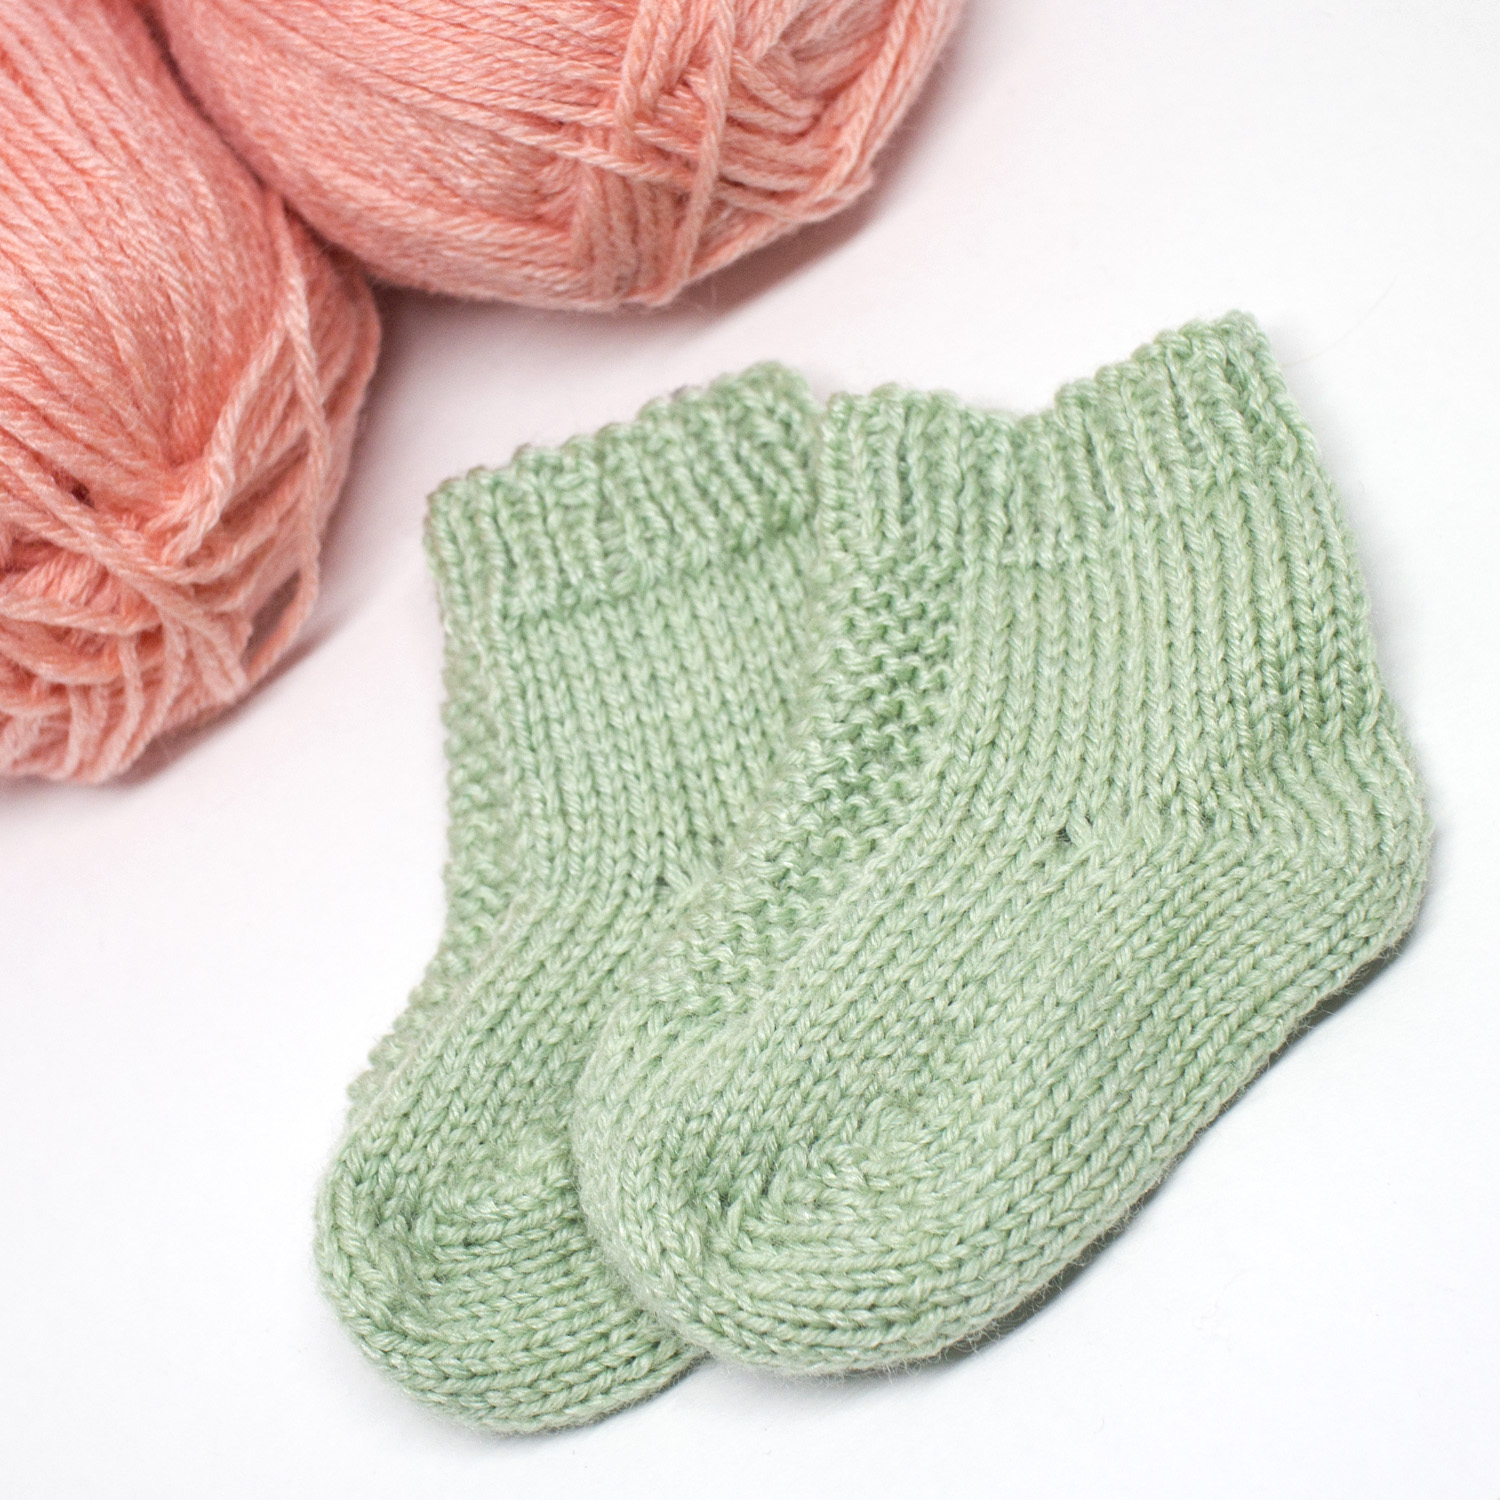 Knitted baby socks